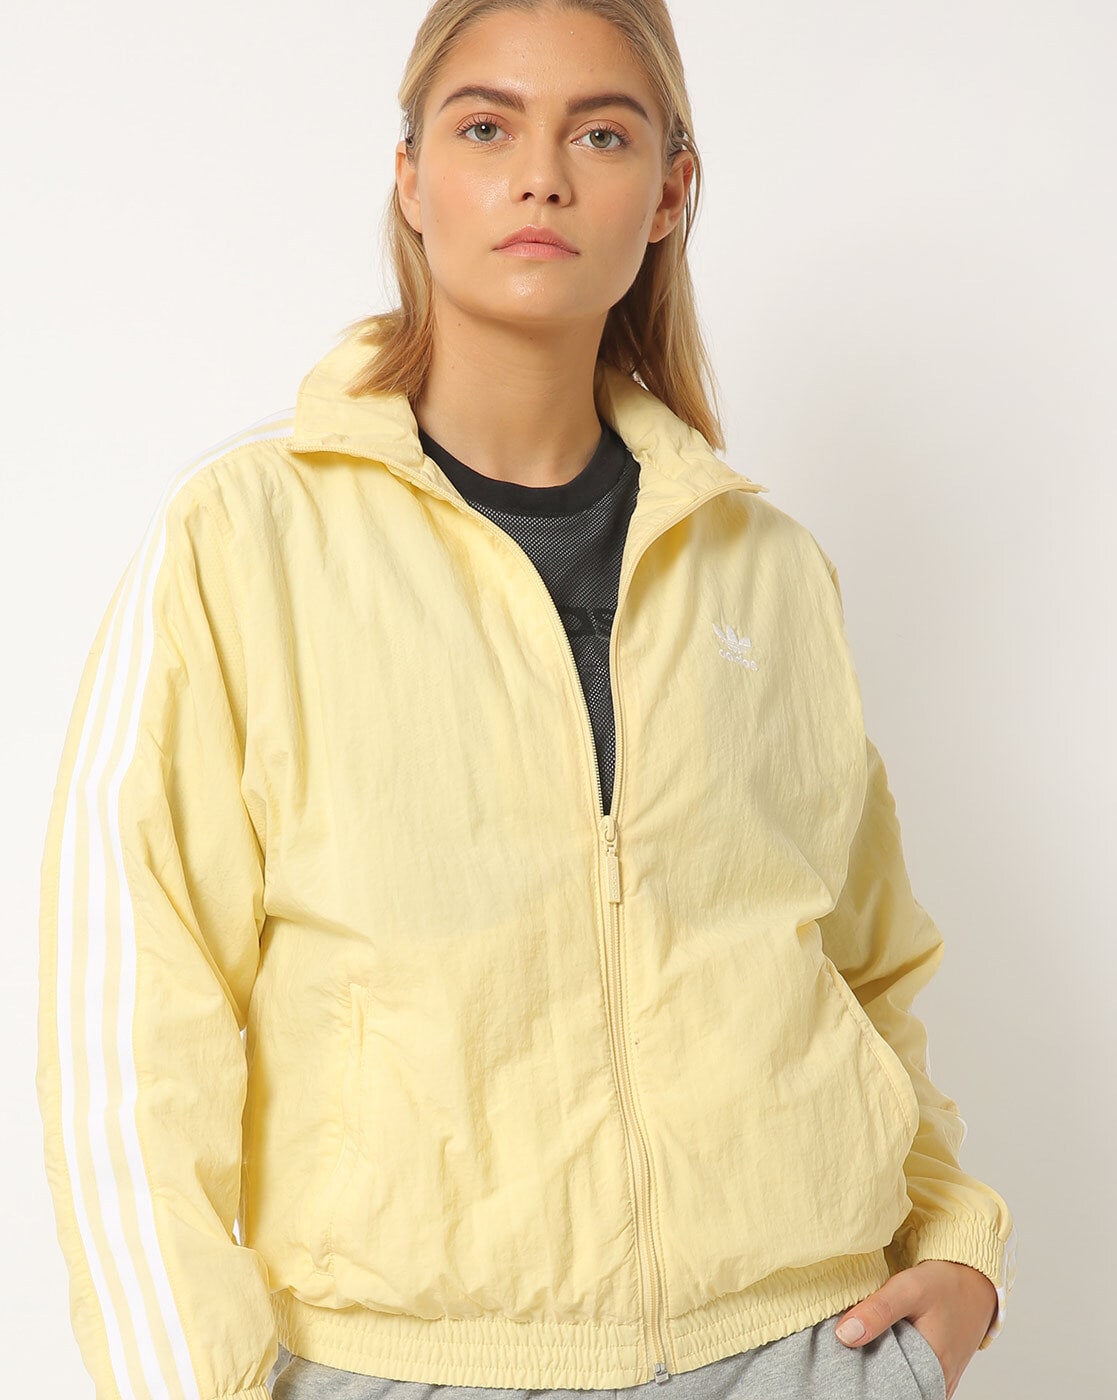 yellow adidas women's jacket